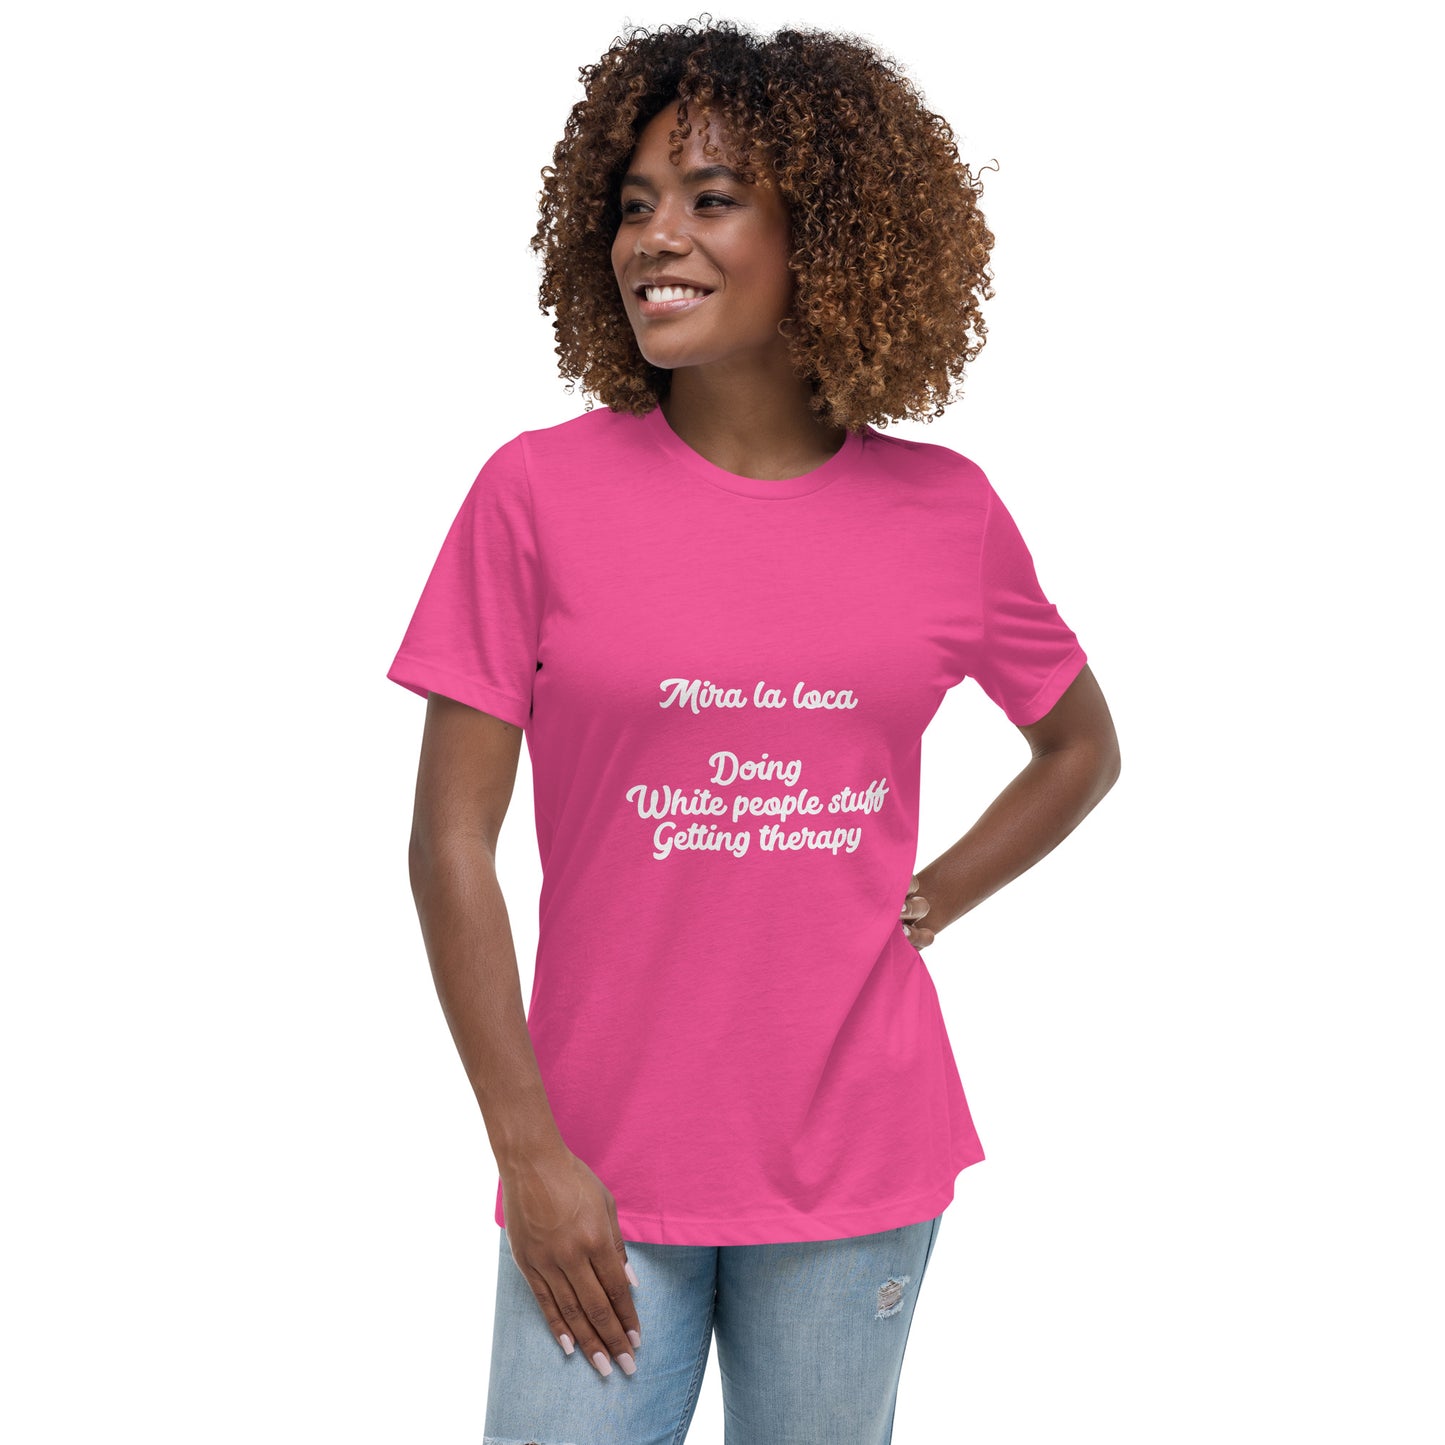 Mira la loca Women's Relaxed T-Shirt